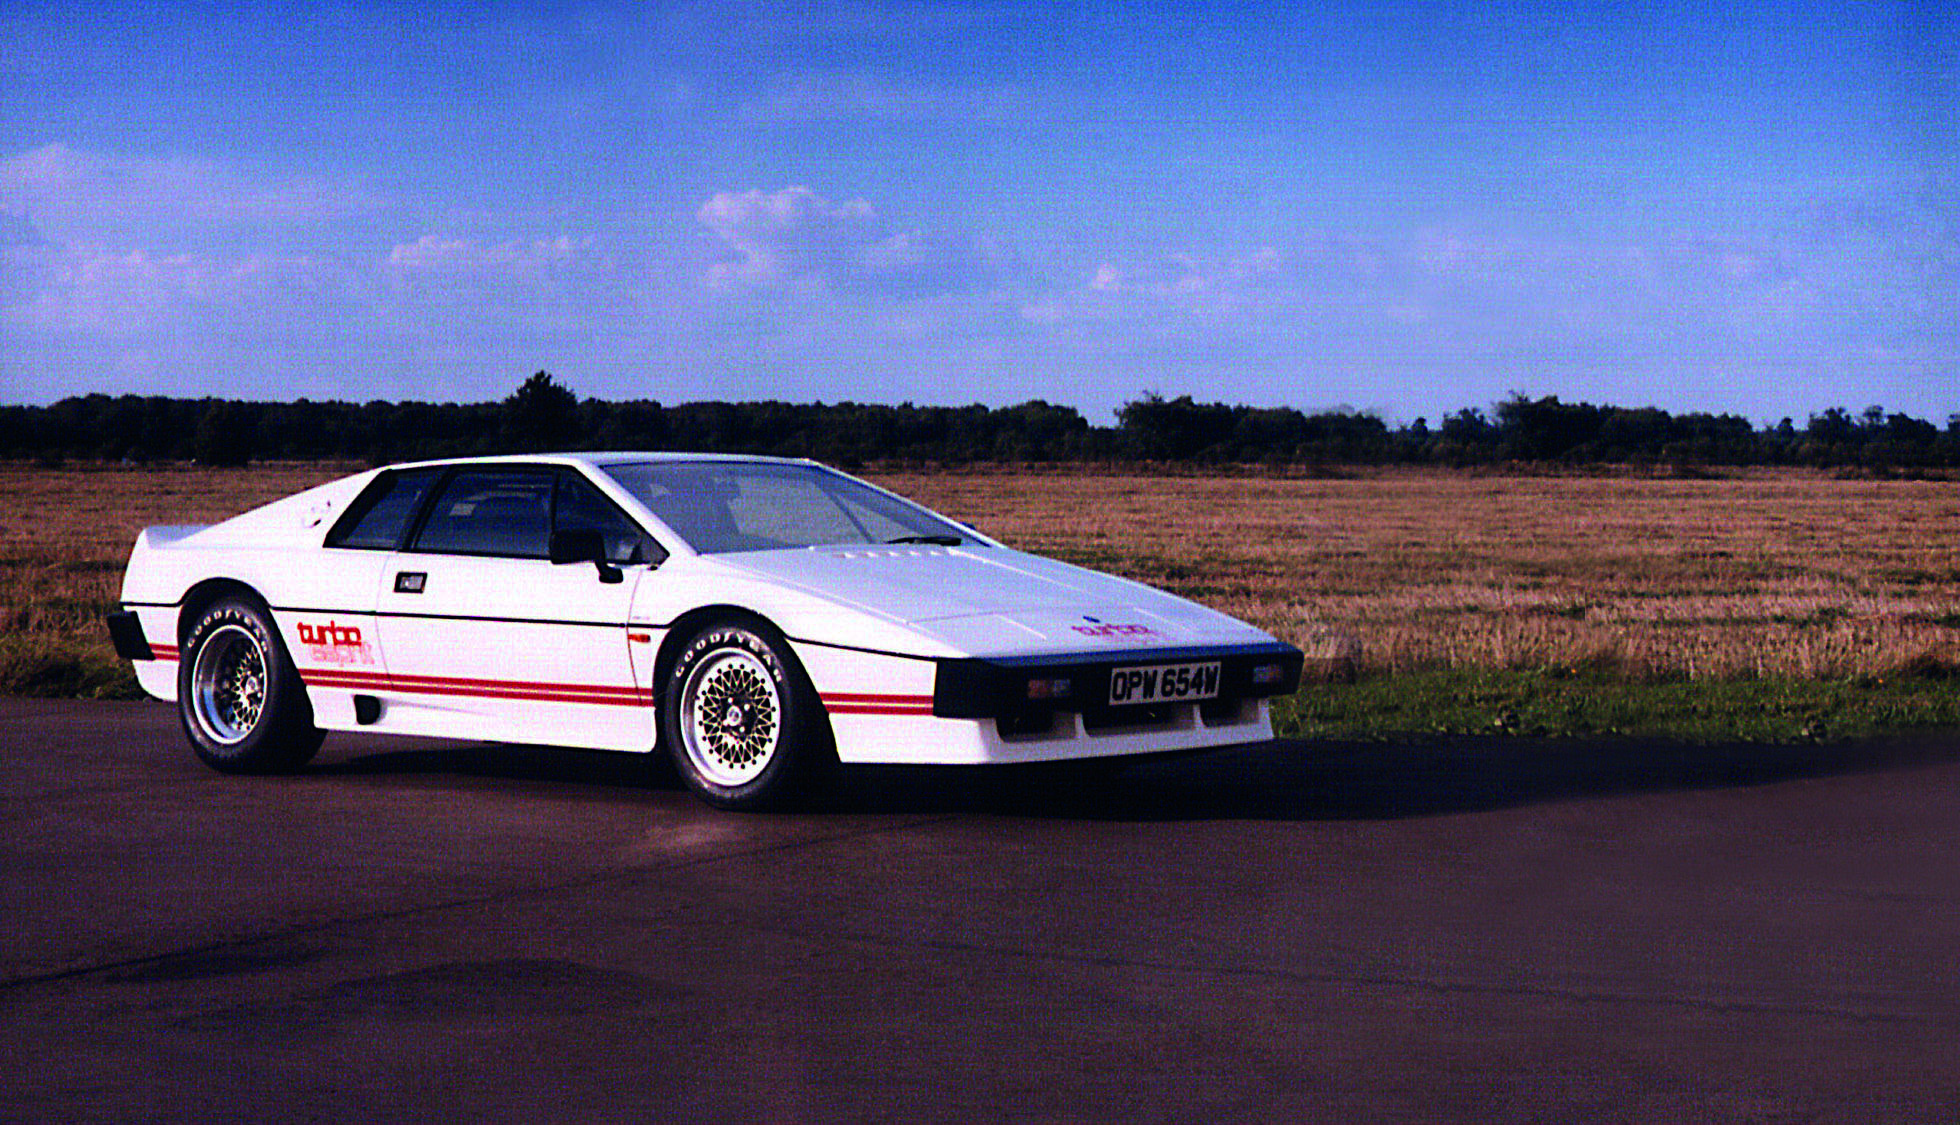 LOTUS Esprit S1 規格表 國籍:英國 發表時間:1976年 規格:長 4,191×寬 1,861×高 1,111 mm 引擎:直列四缸 排氣量:1,973 c.c. 馬力:160 bhp 扭力:19.4kgm/4,000rpm